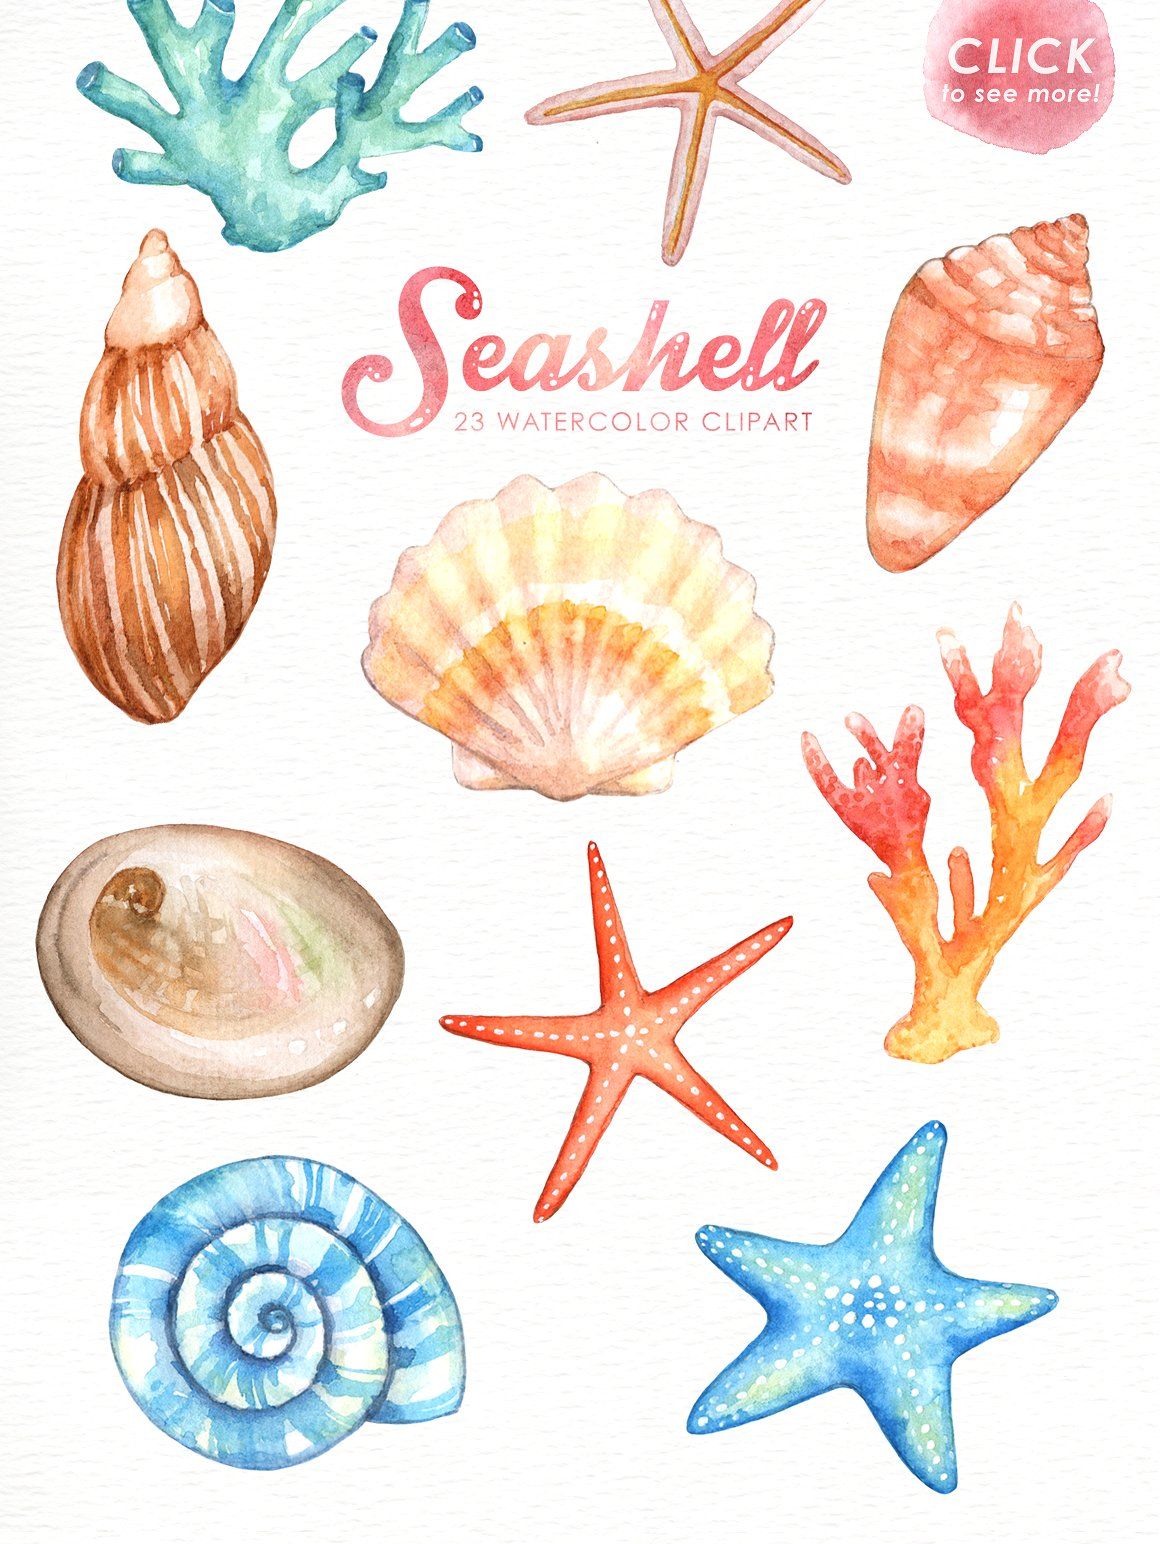 Seashell watercolor cliparts.